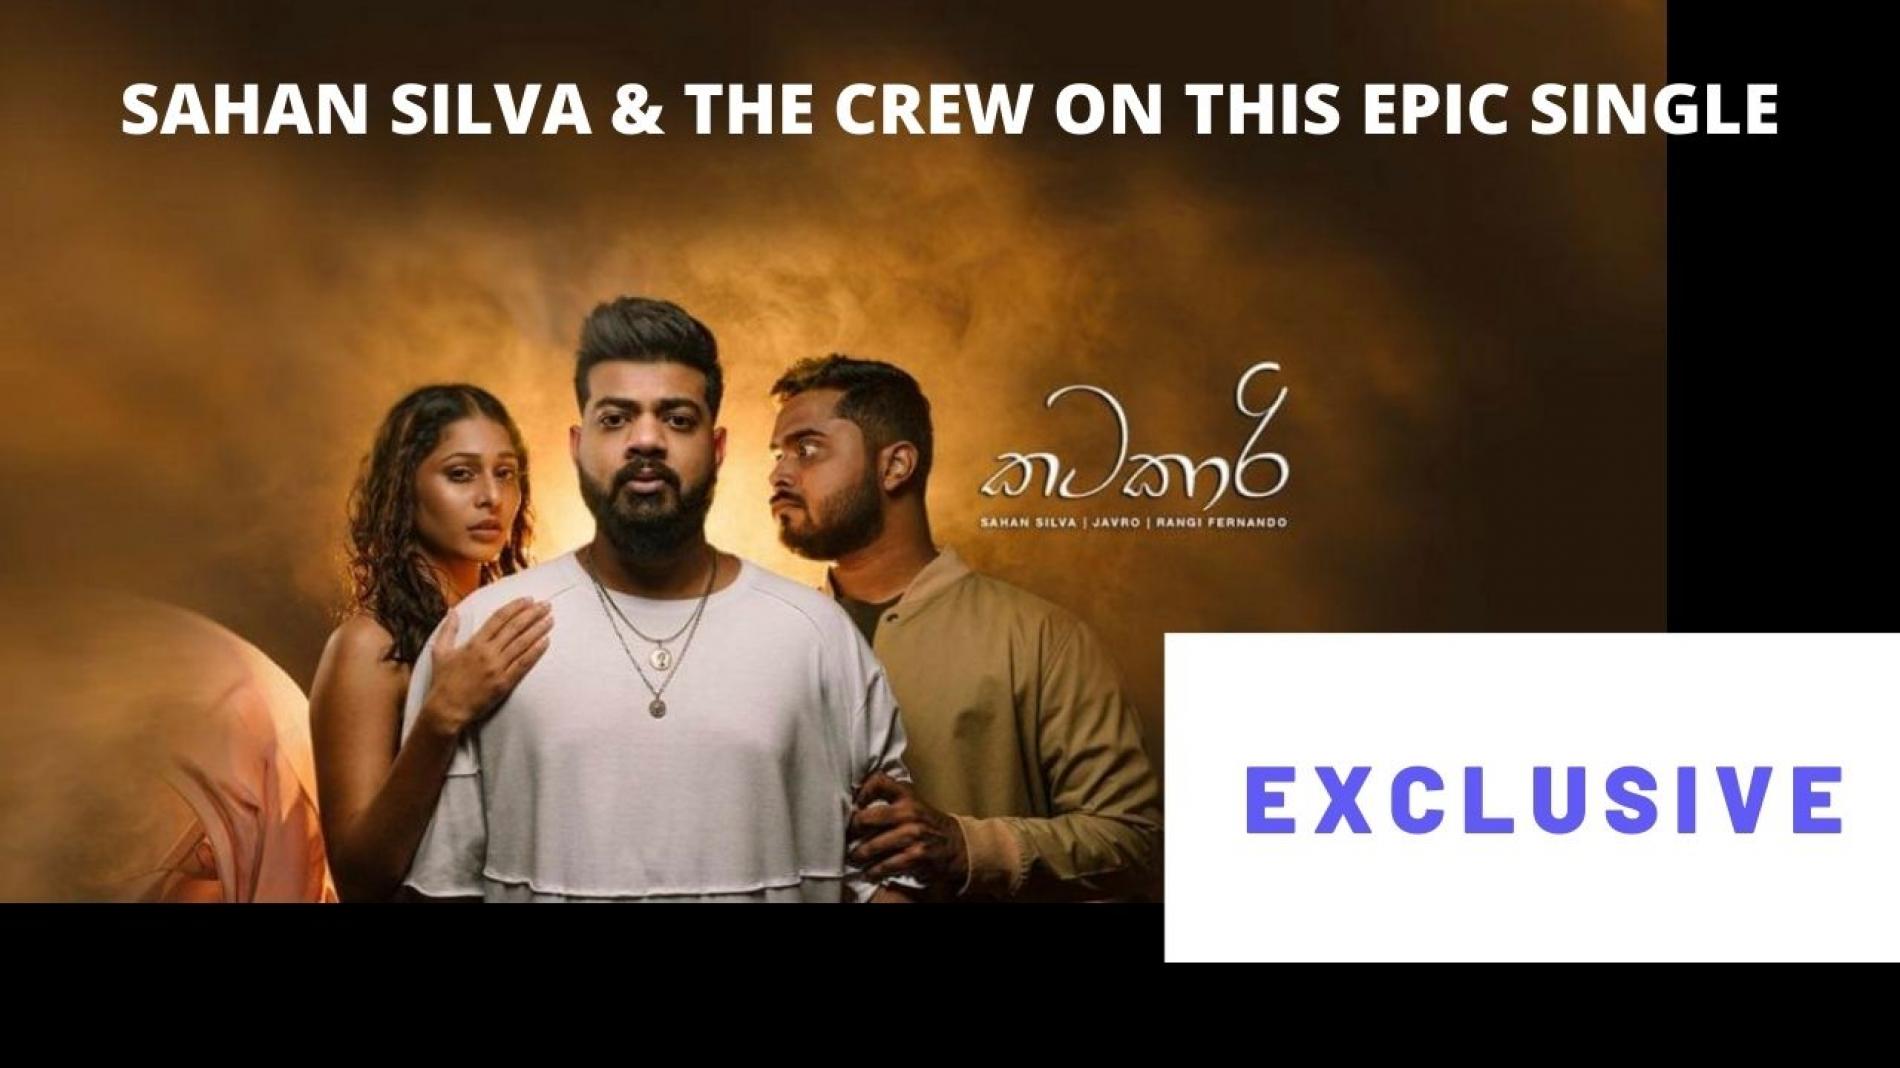 That Exclusive On ‘Katakaari (කටකාරි)’ With Sahan Silva & The Crew!